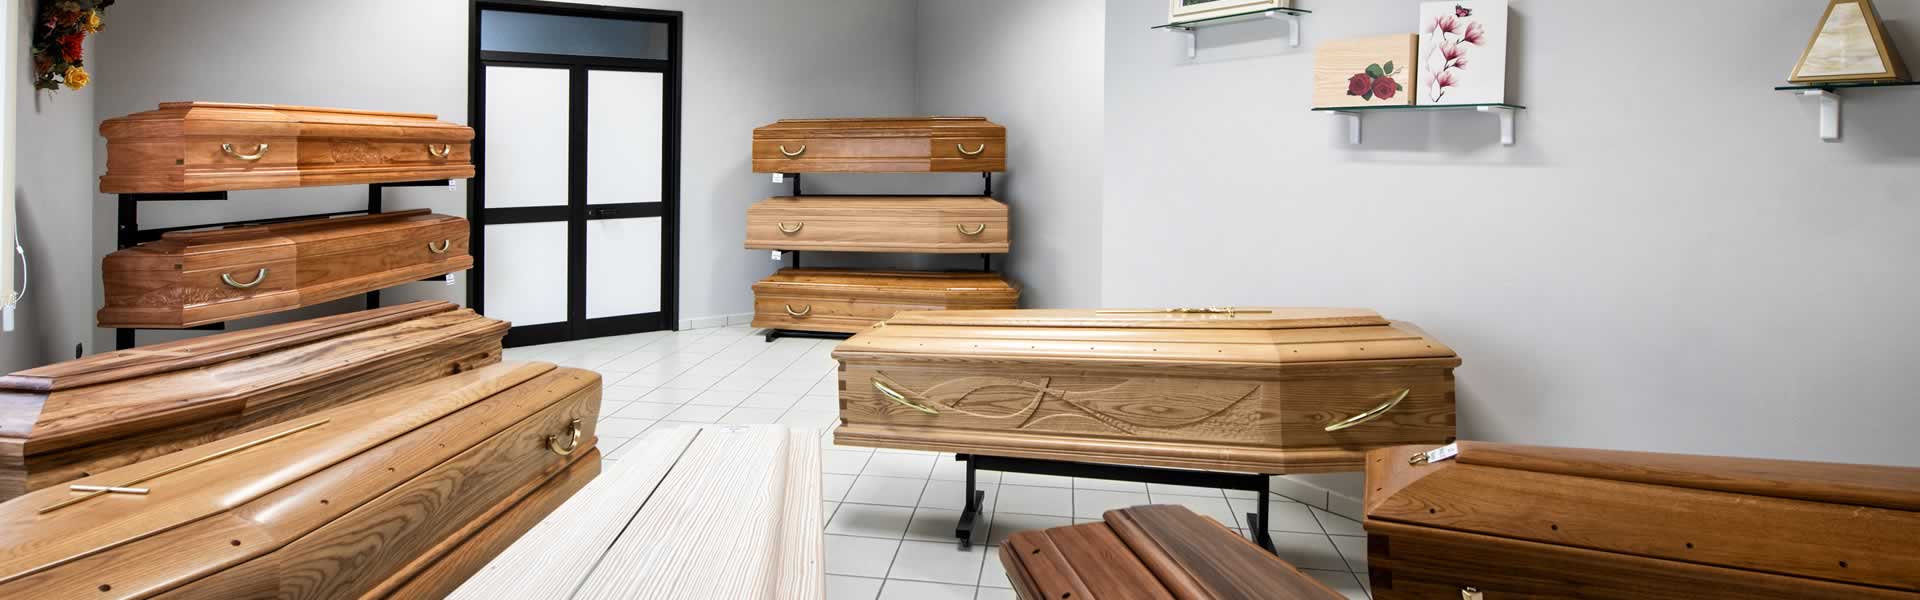 Cofani funebri in legno per funerali e riti funebri